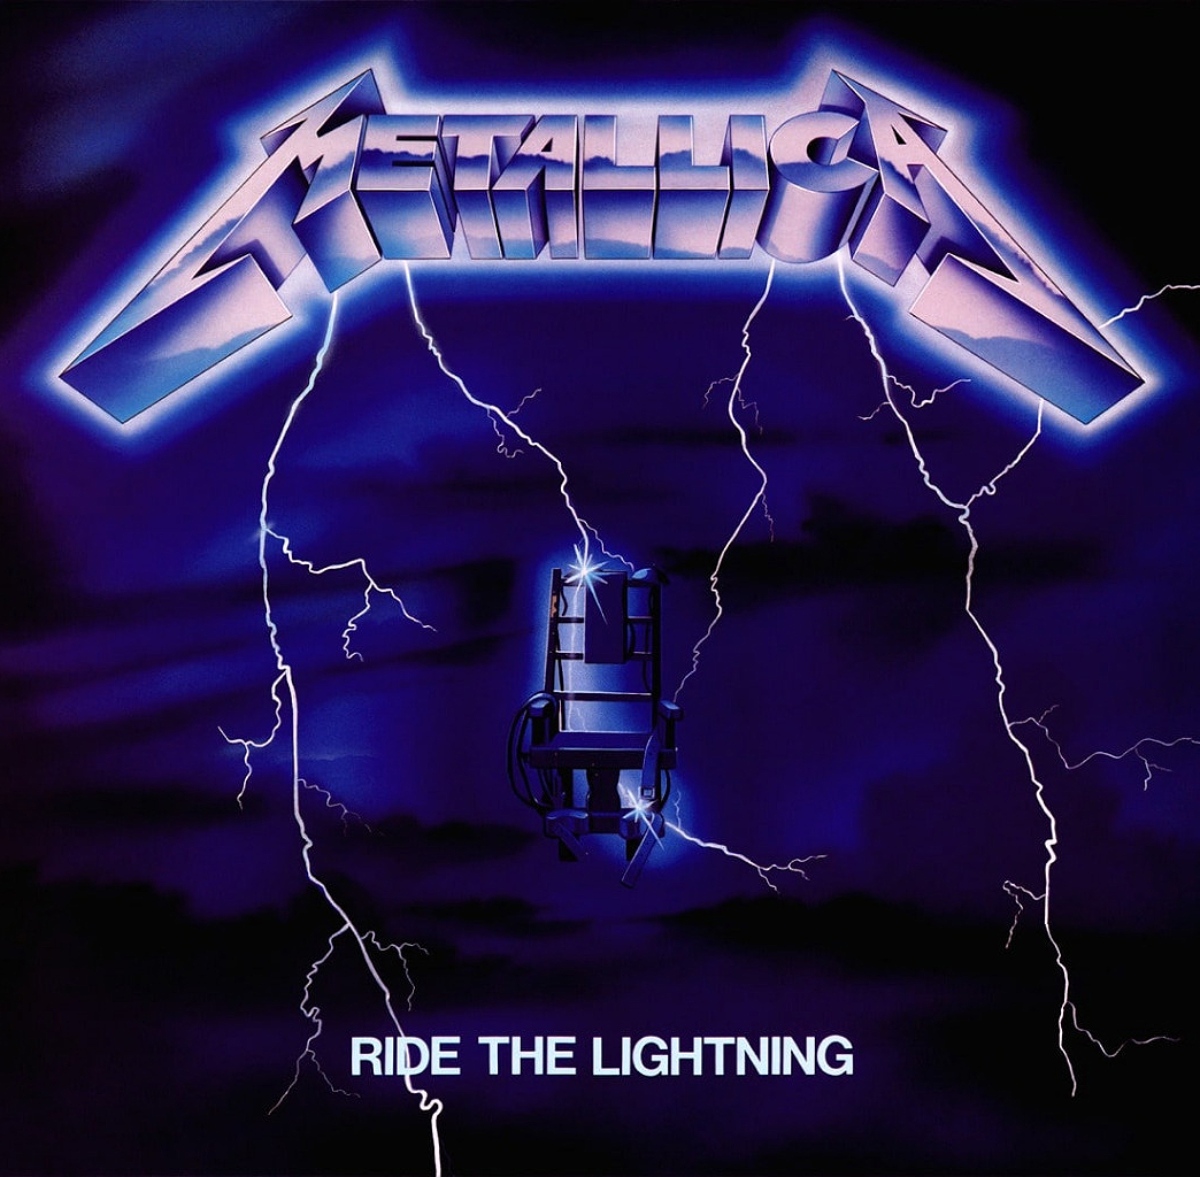 Cover of Metallica's "Ride the Lightning" album